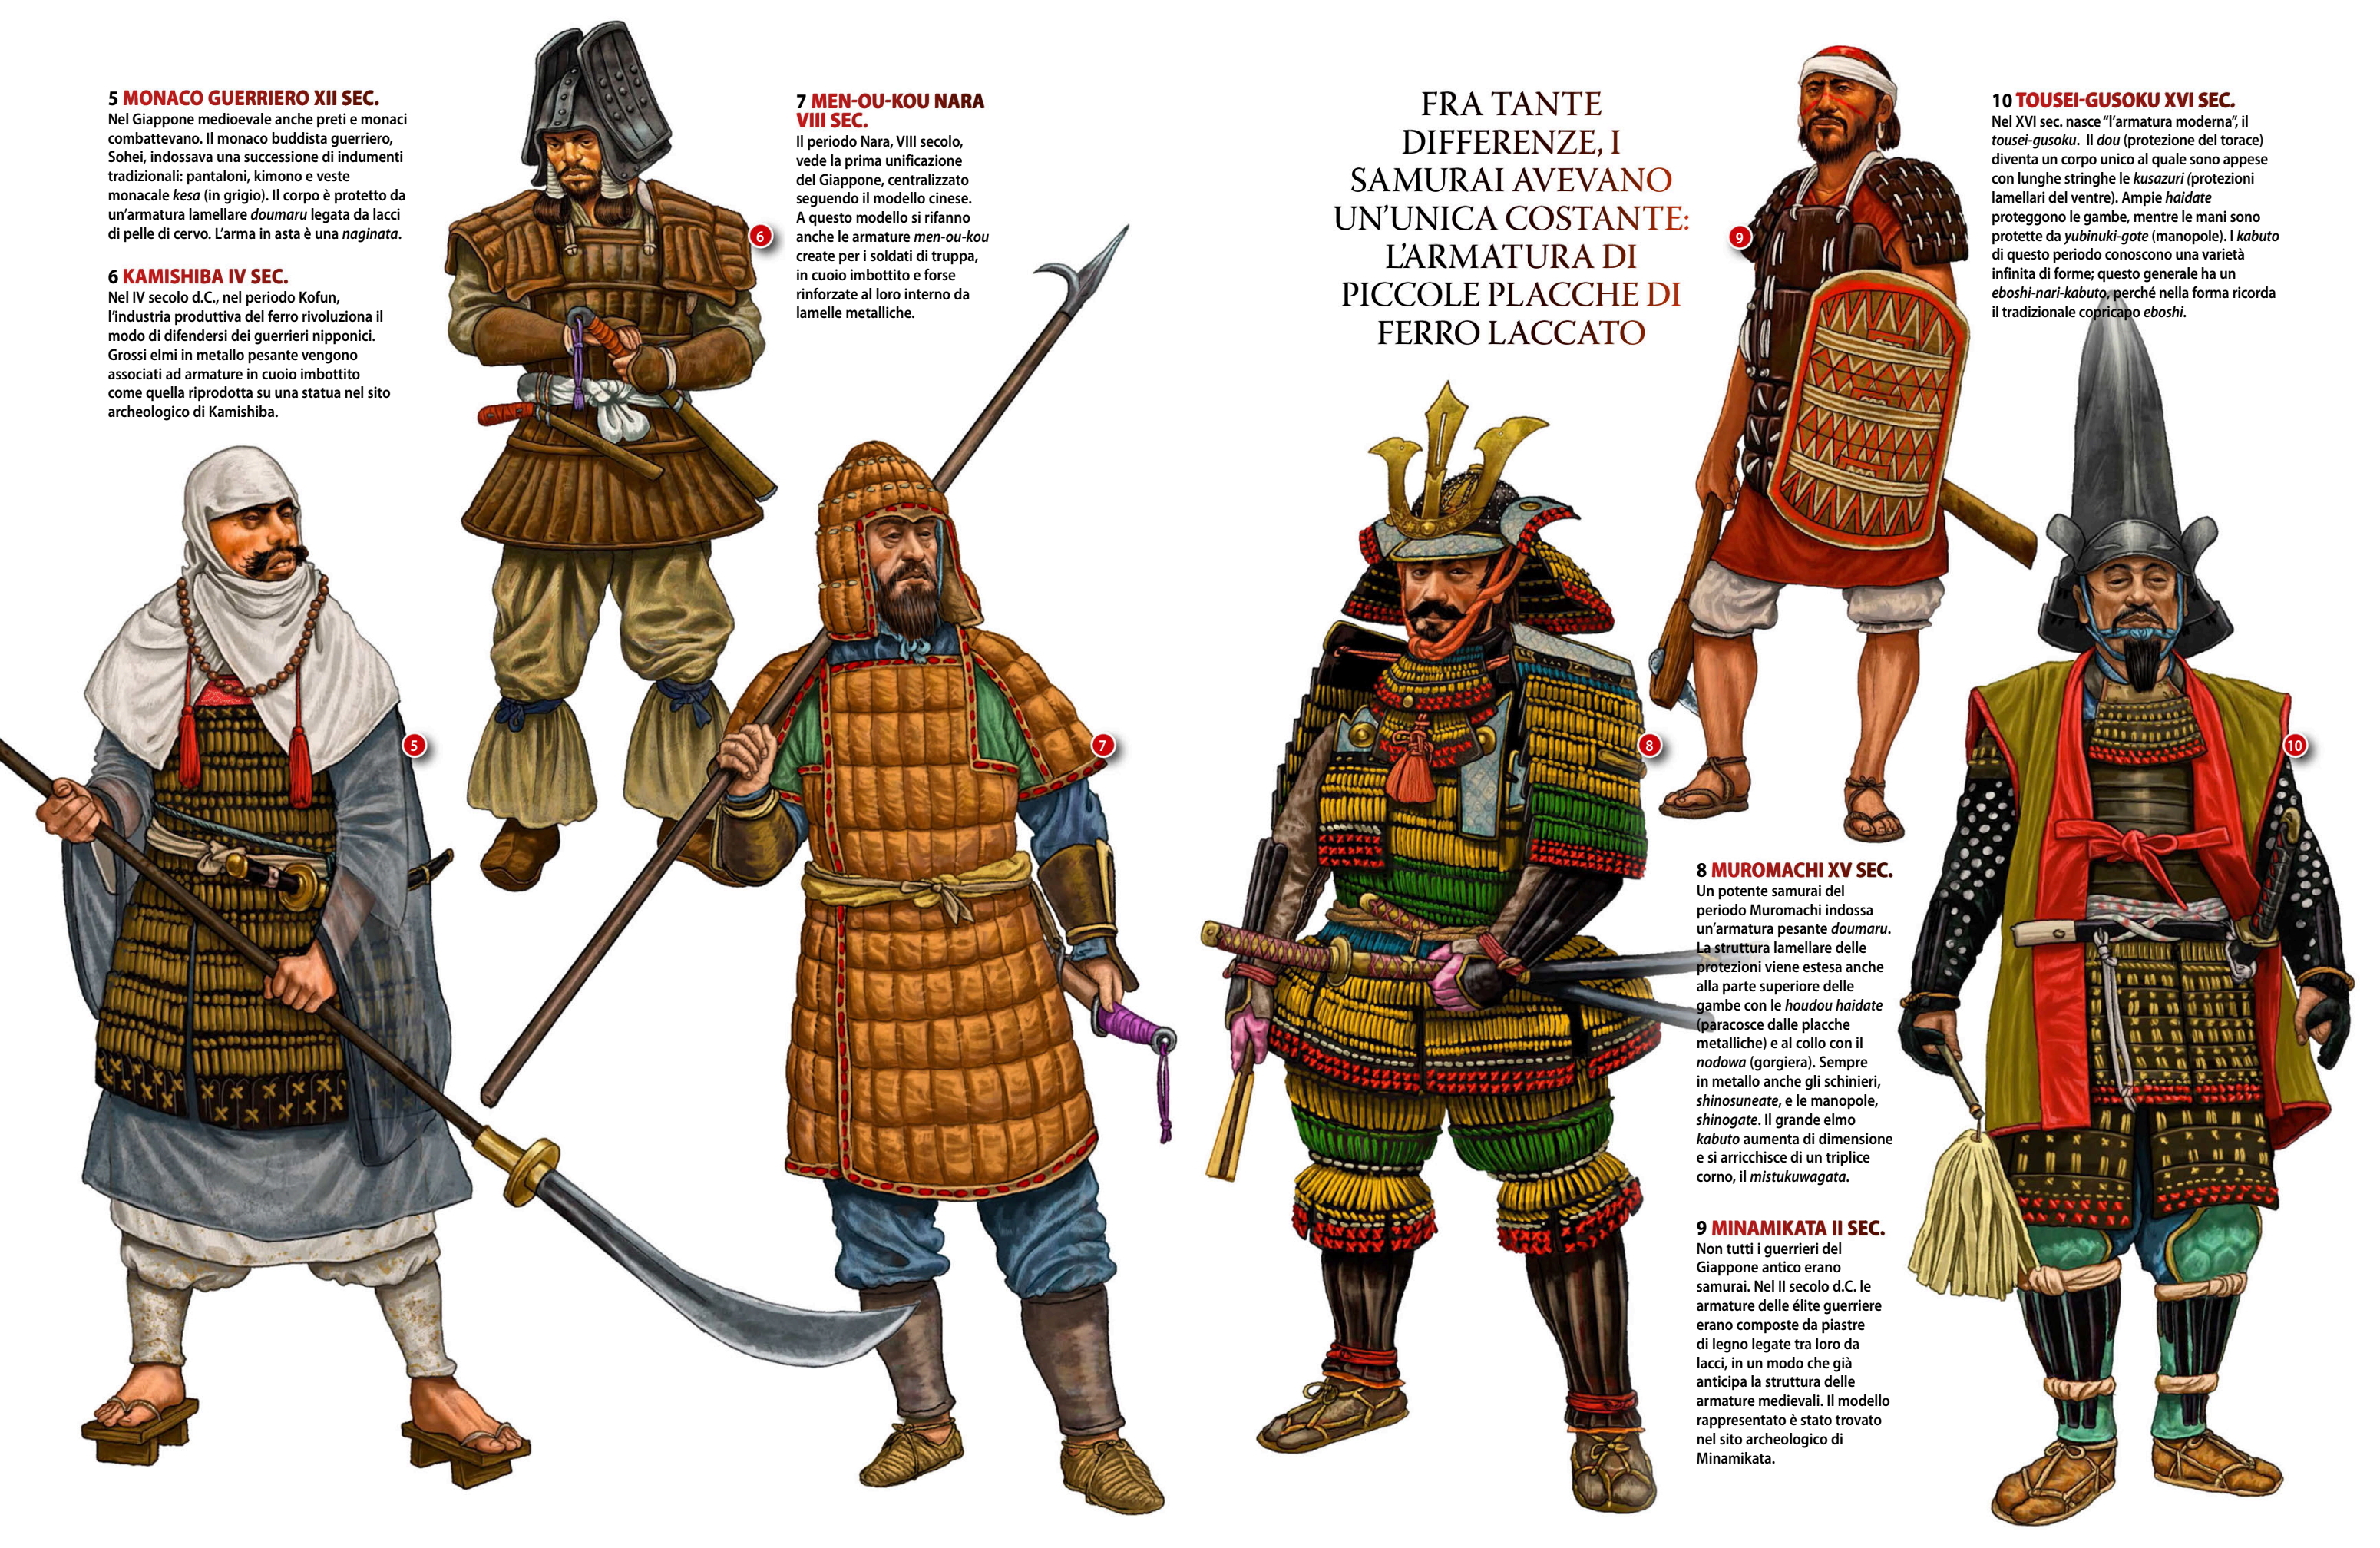 1706410343 971 Samurai The warrior class of feudal Japan